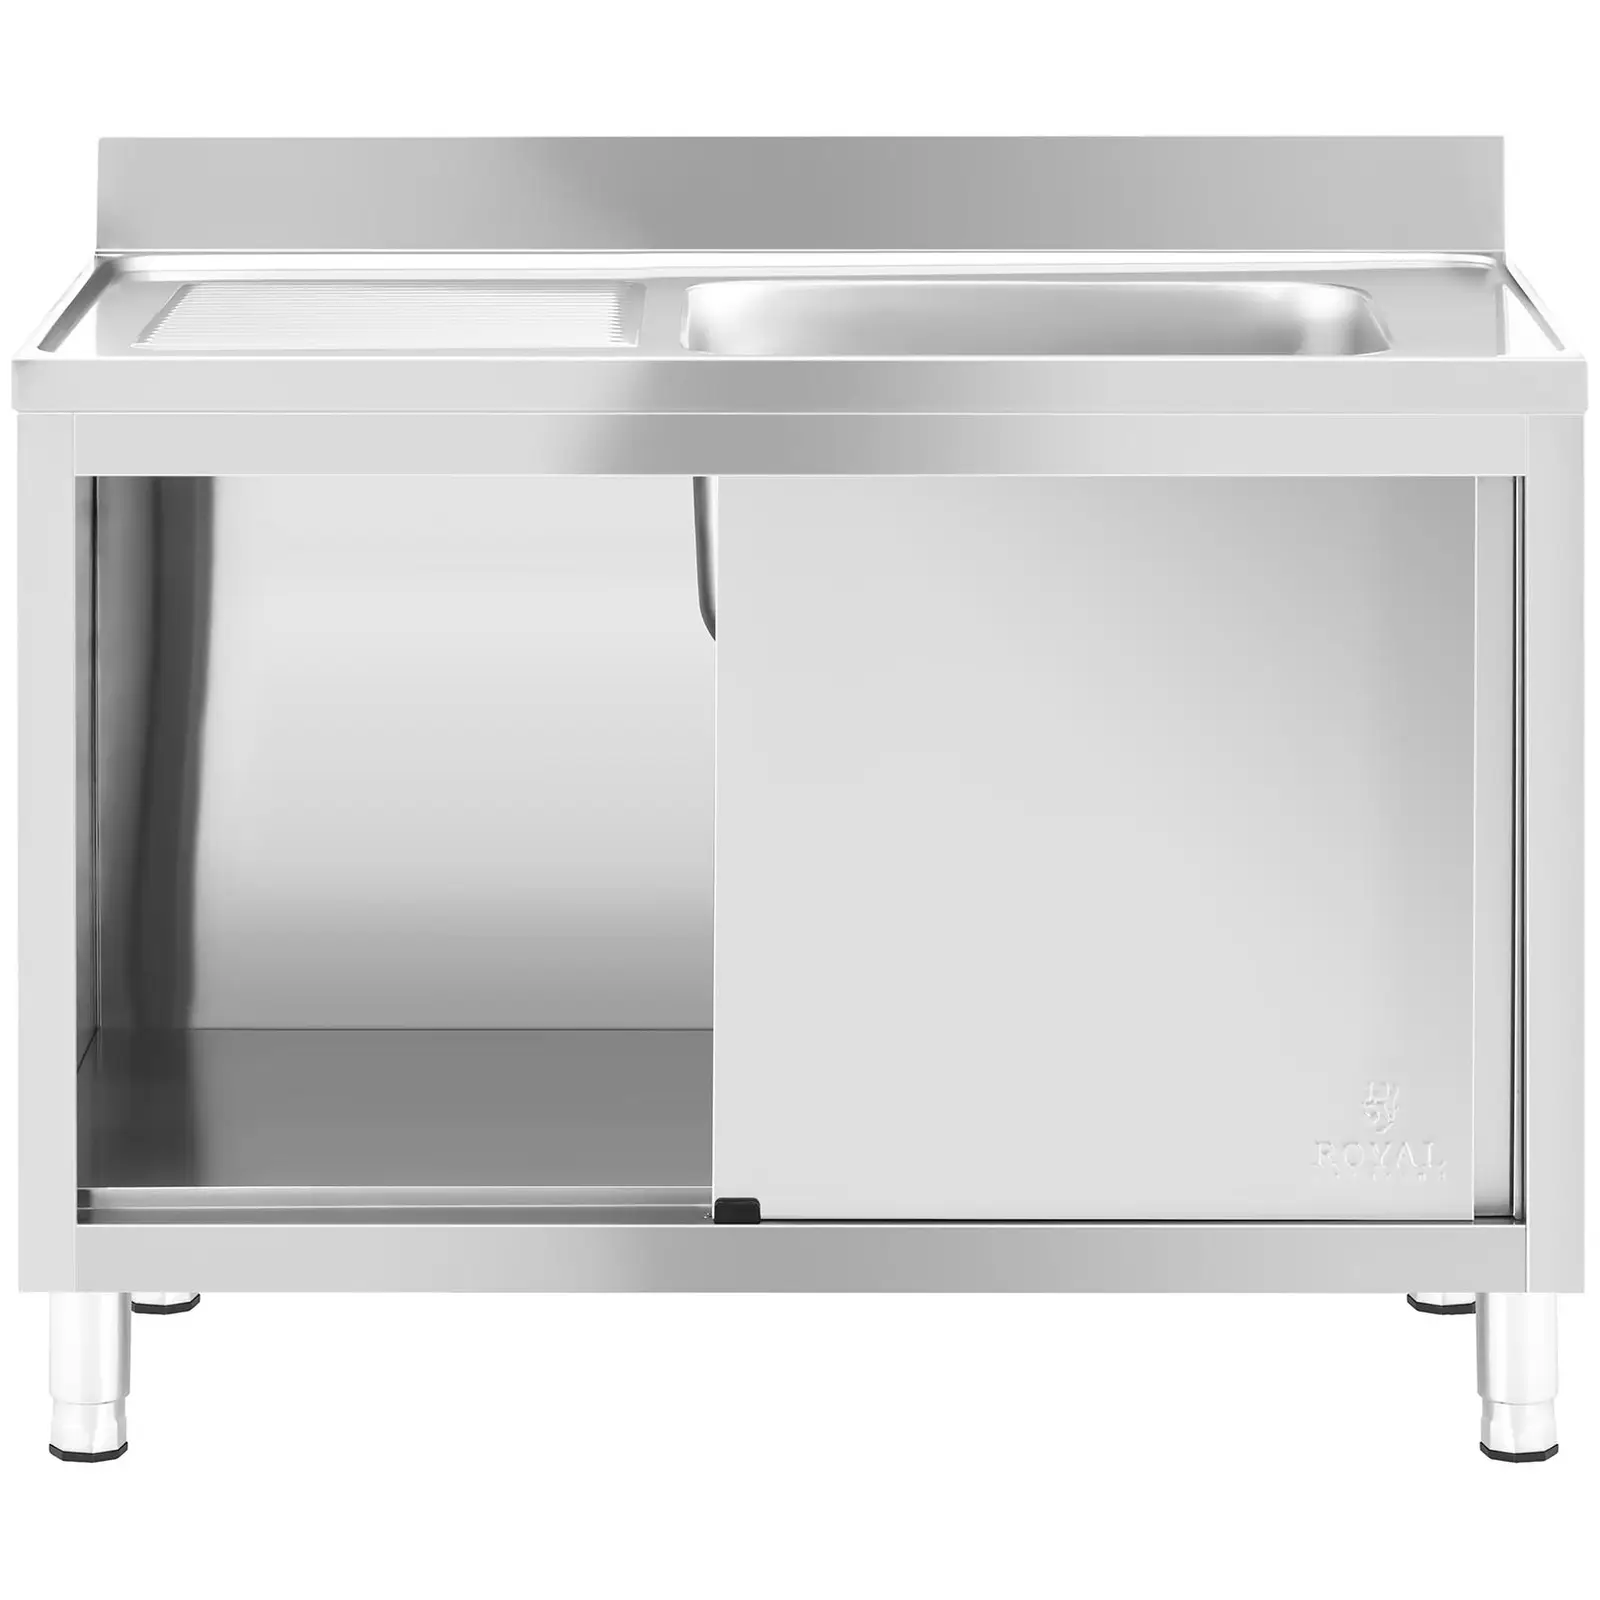 Lavello cucina - Acciaio inox - 1 vasche - Royal Catering - 500 x 400 x 260 mm